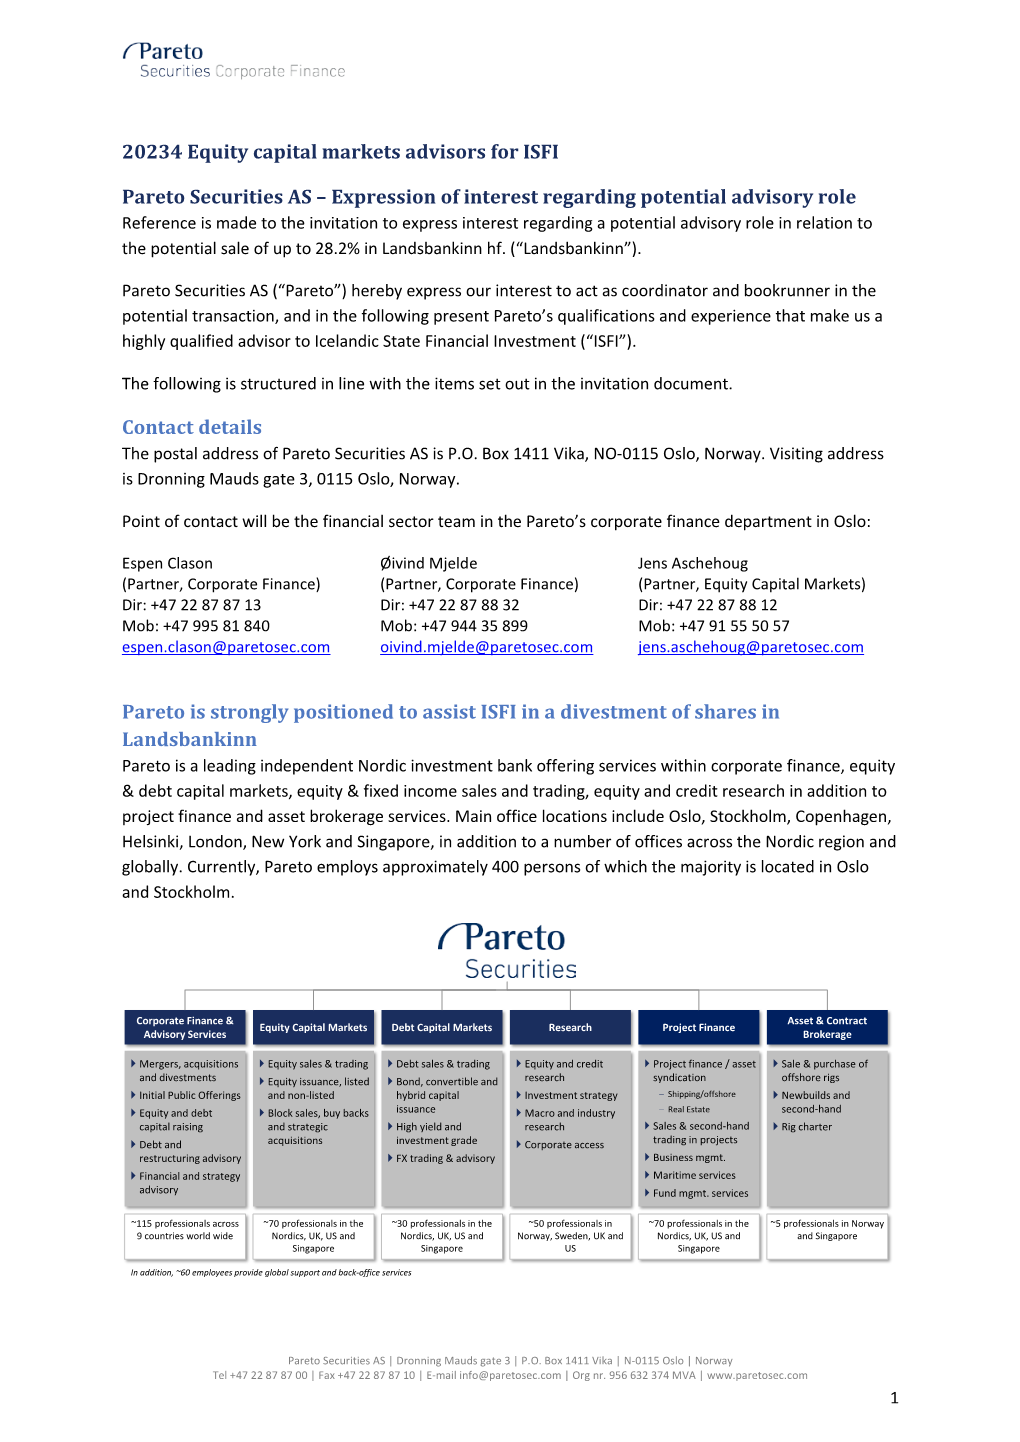 20234 Equity Capital Markets Advisors for ISFI Pareto Securities AS